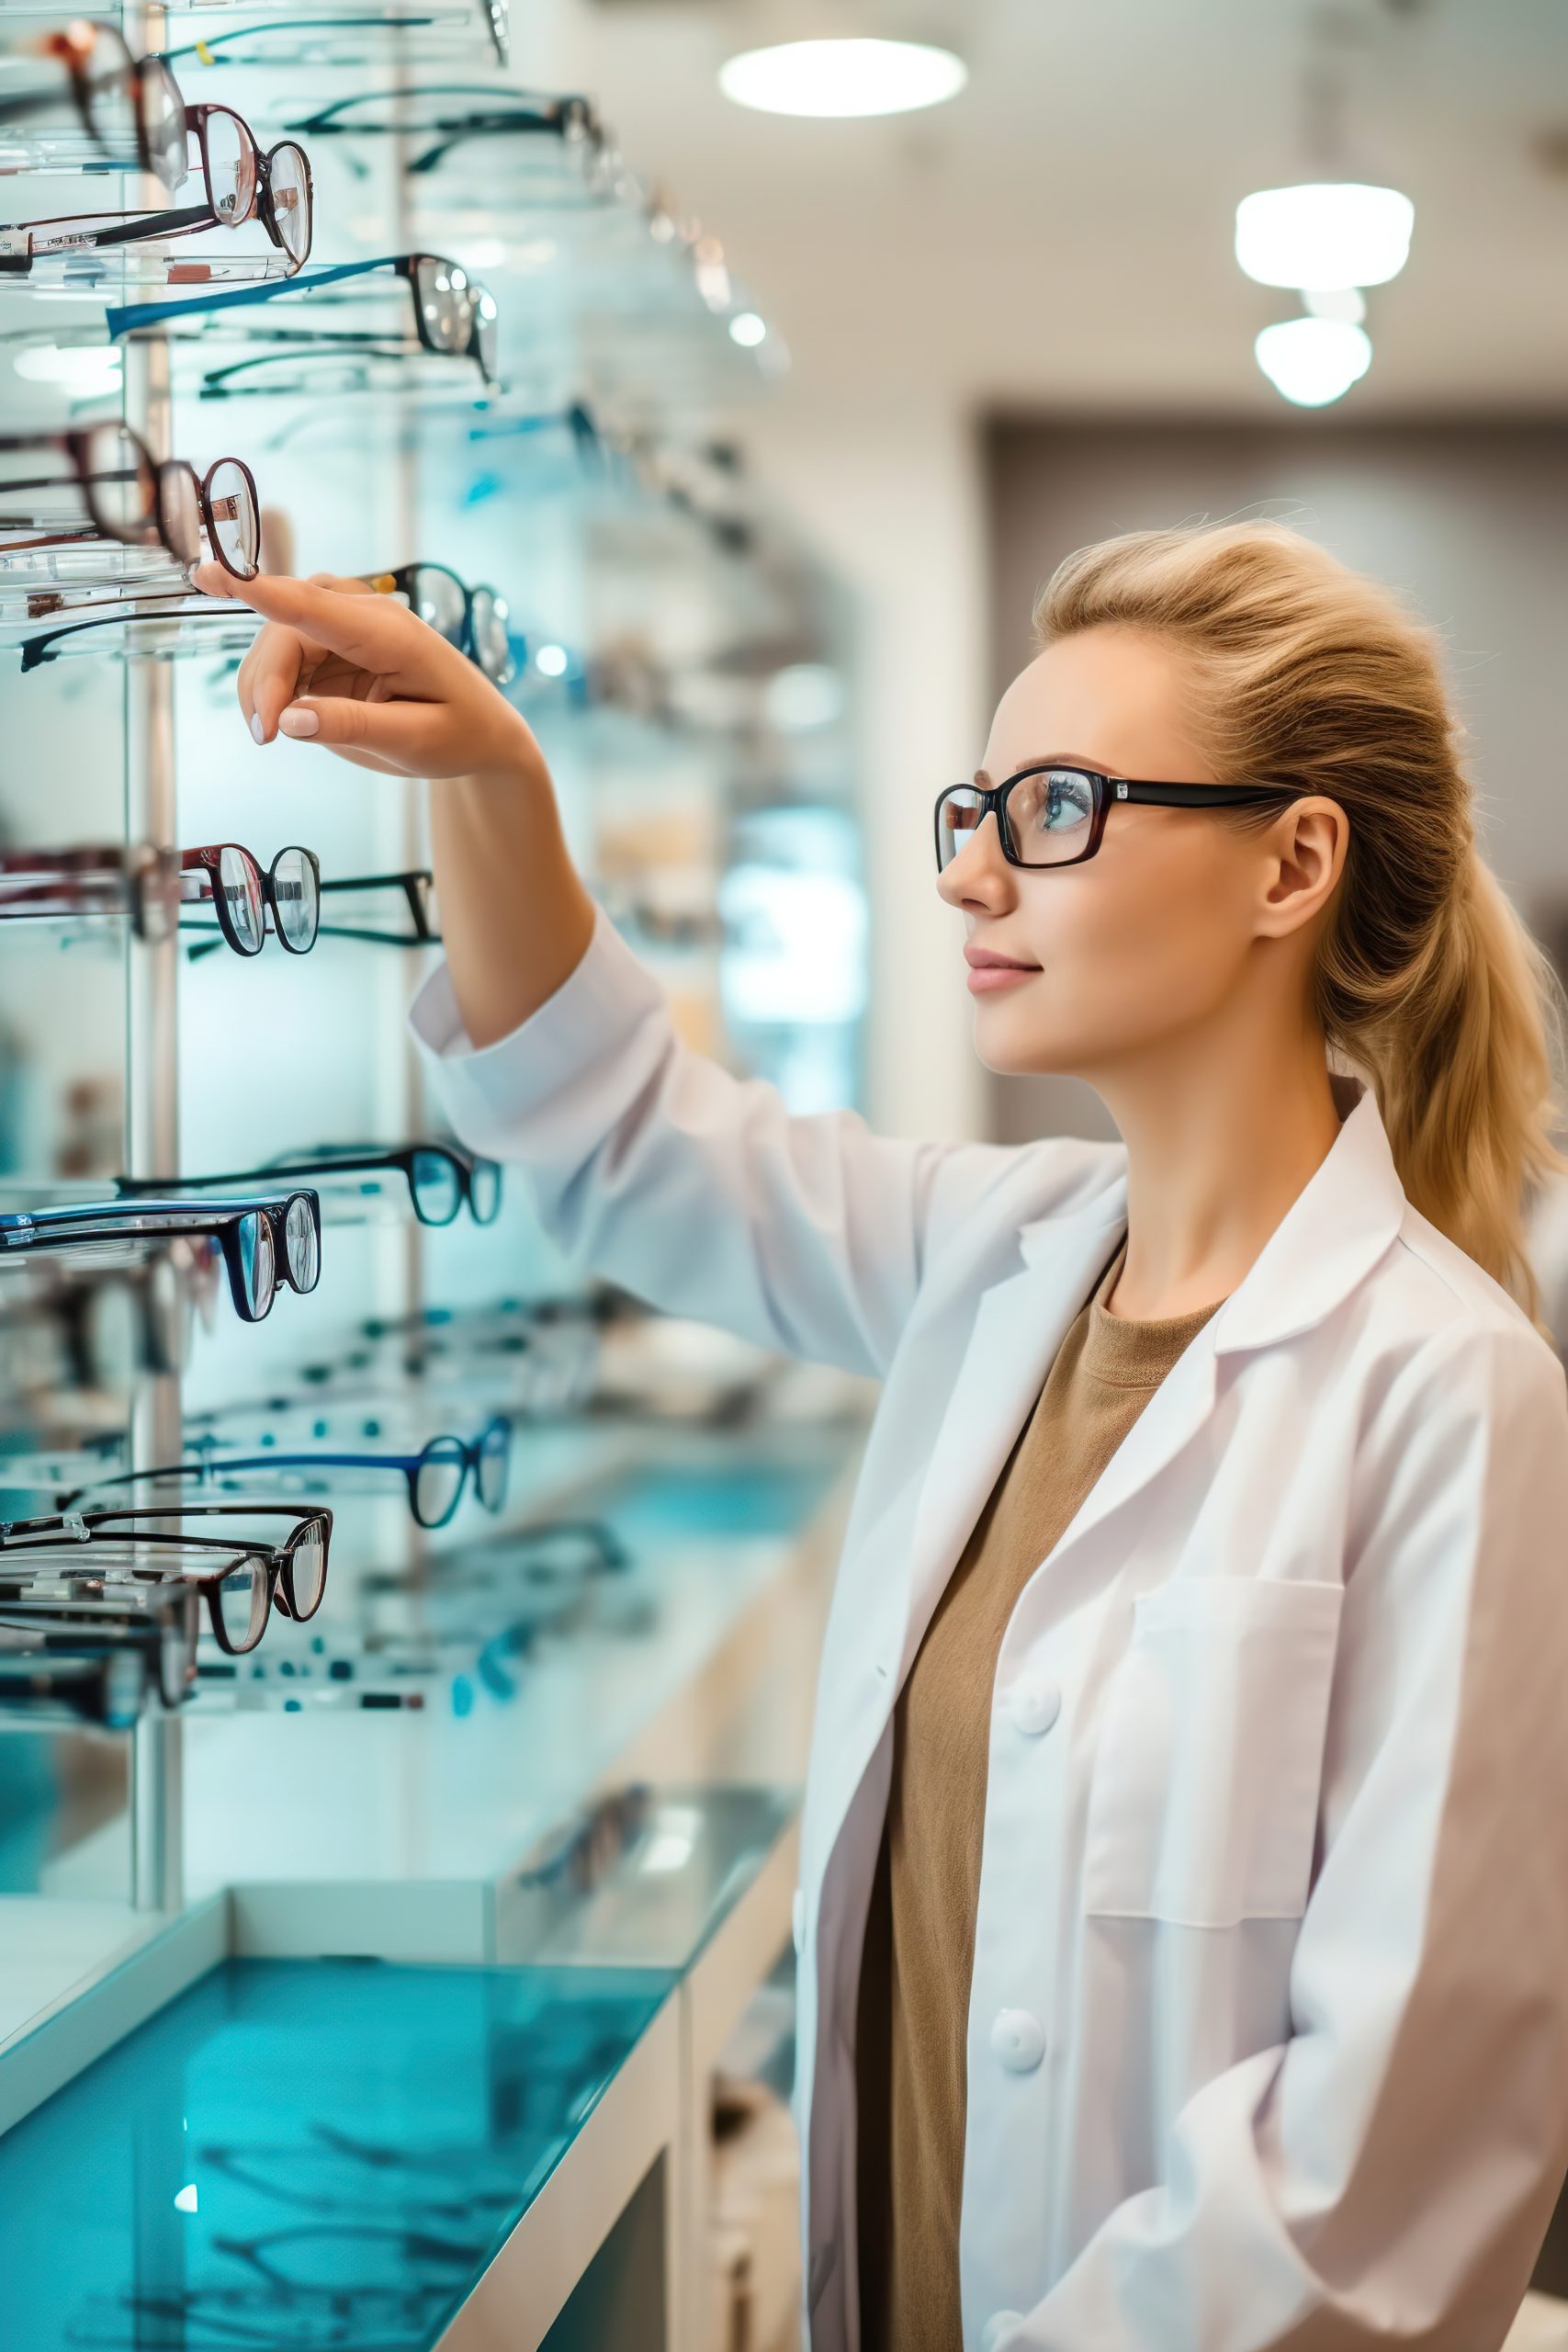 Are Glasses Prescription The Same As Contacts